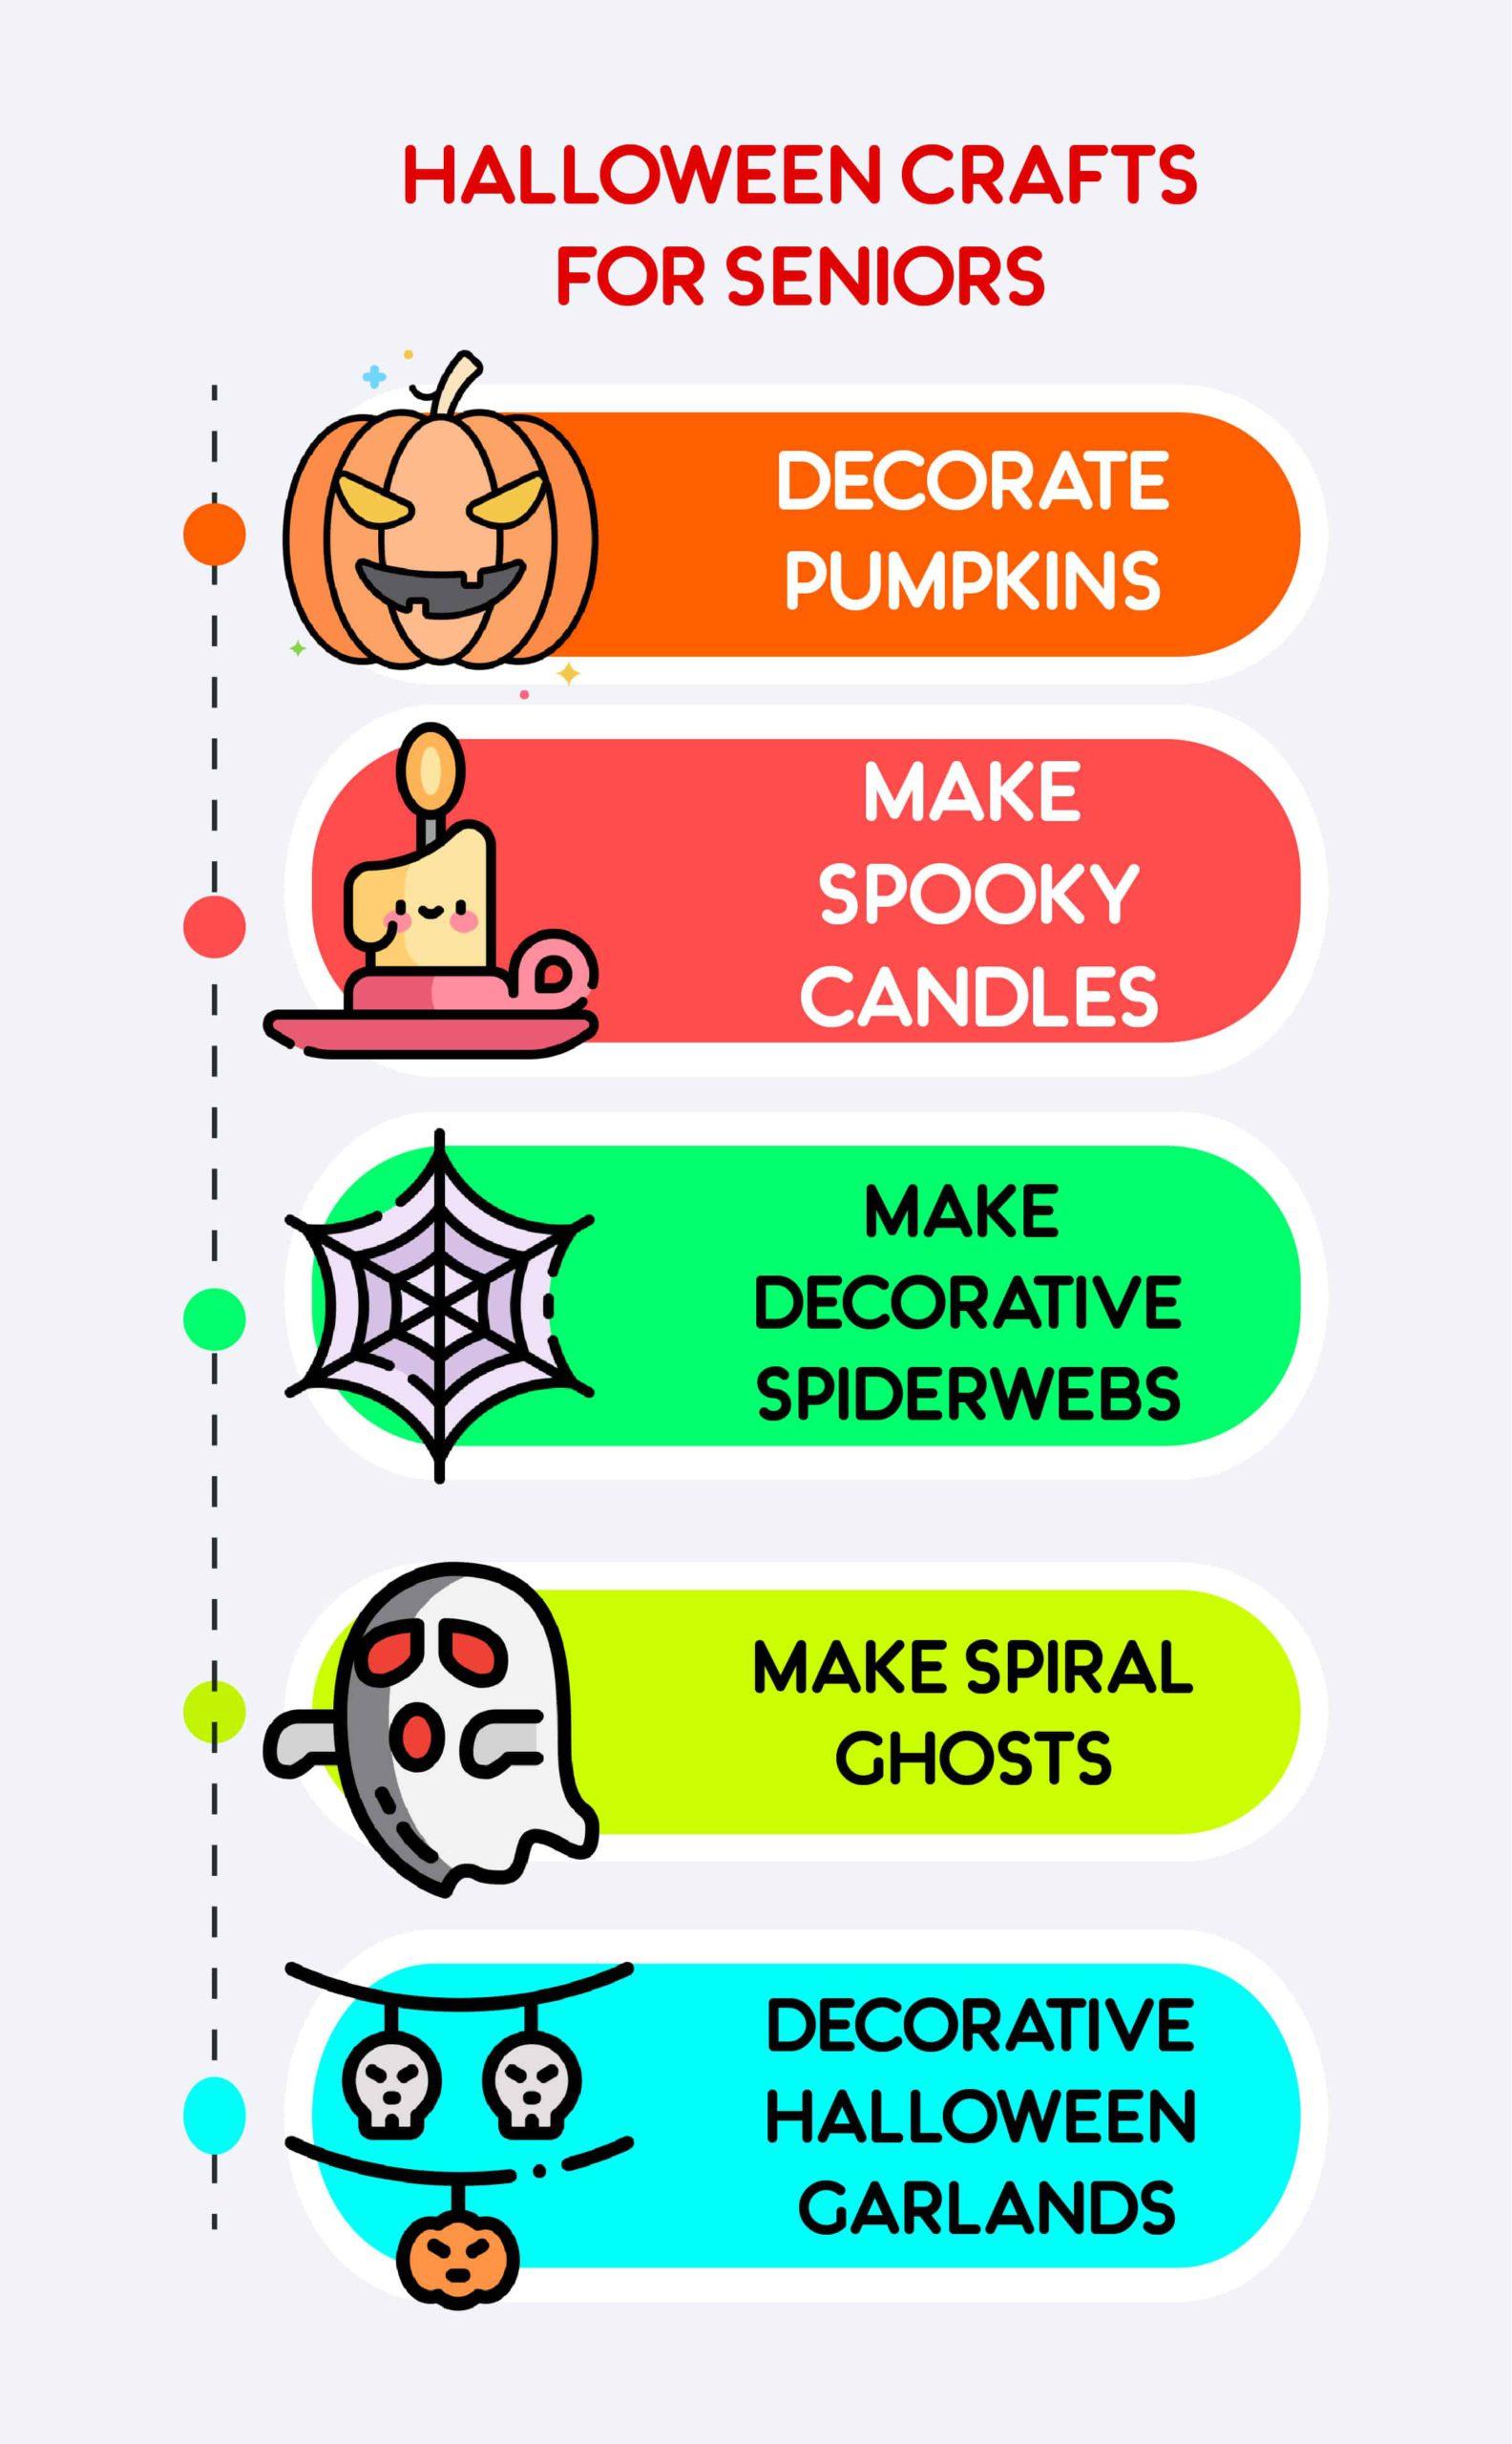 Halloween crafts Ideas for Seniors